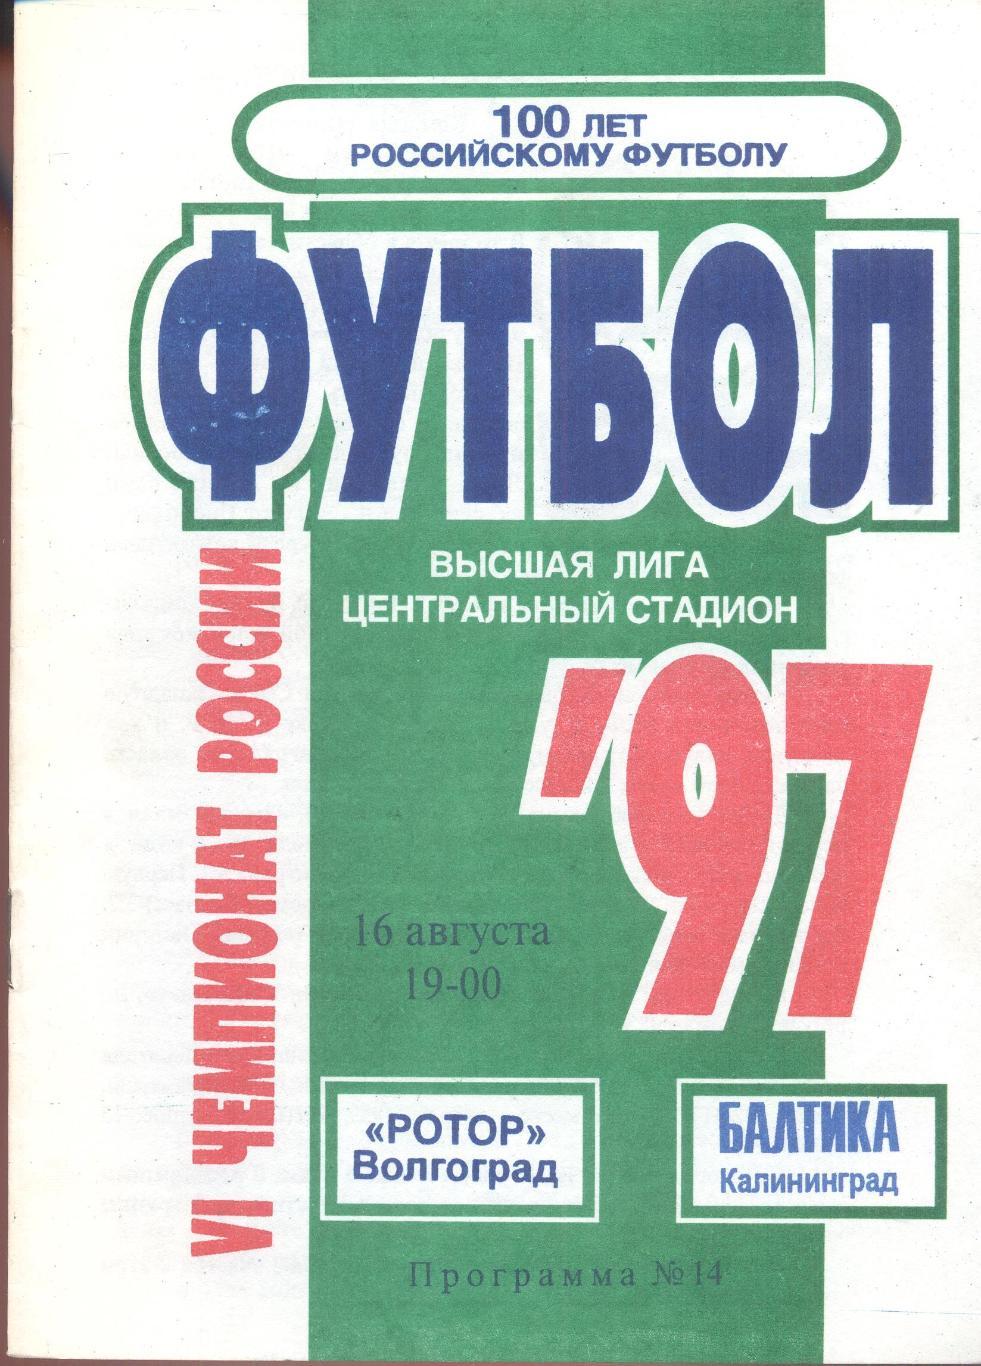 РАСПРОДАЖА ротор волгоград-балтика калининград 16.08.1997